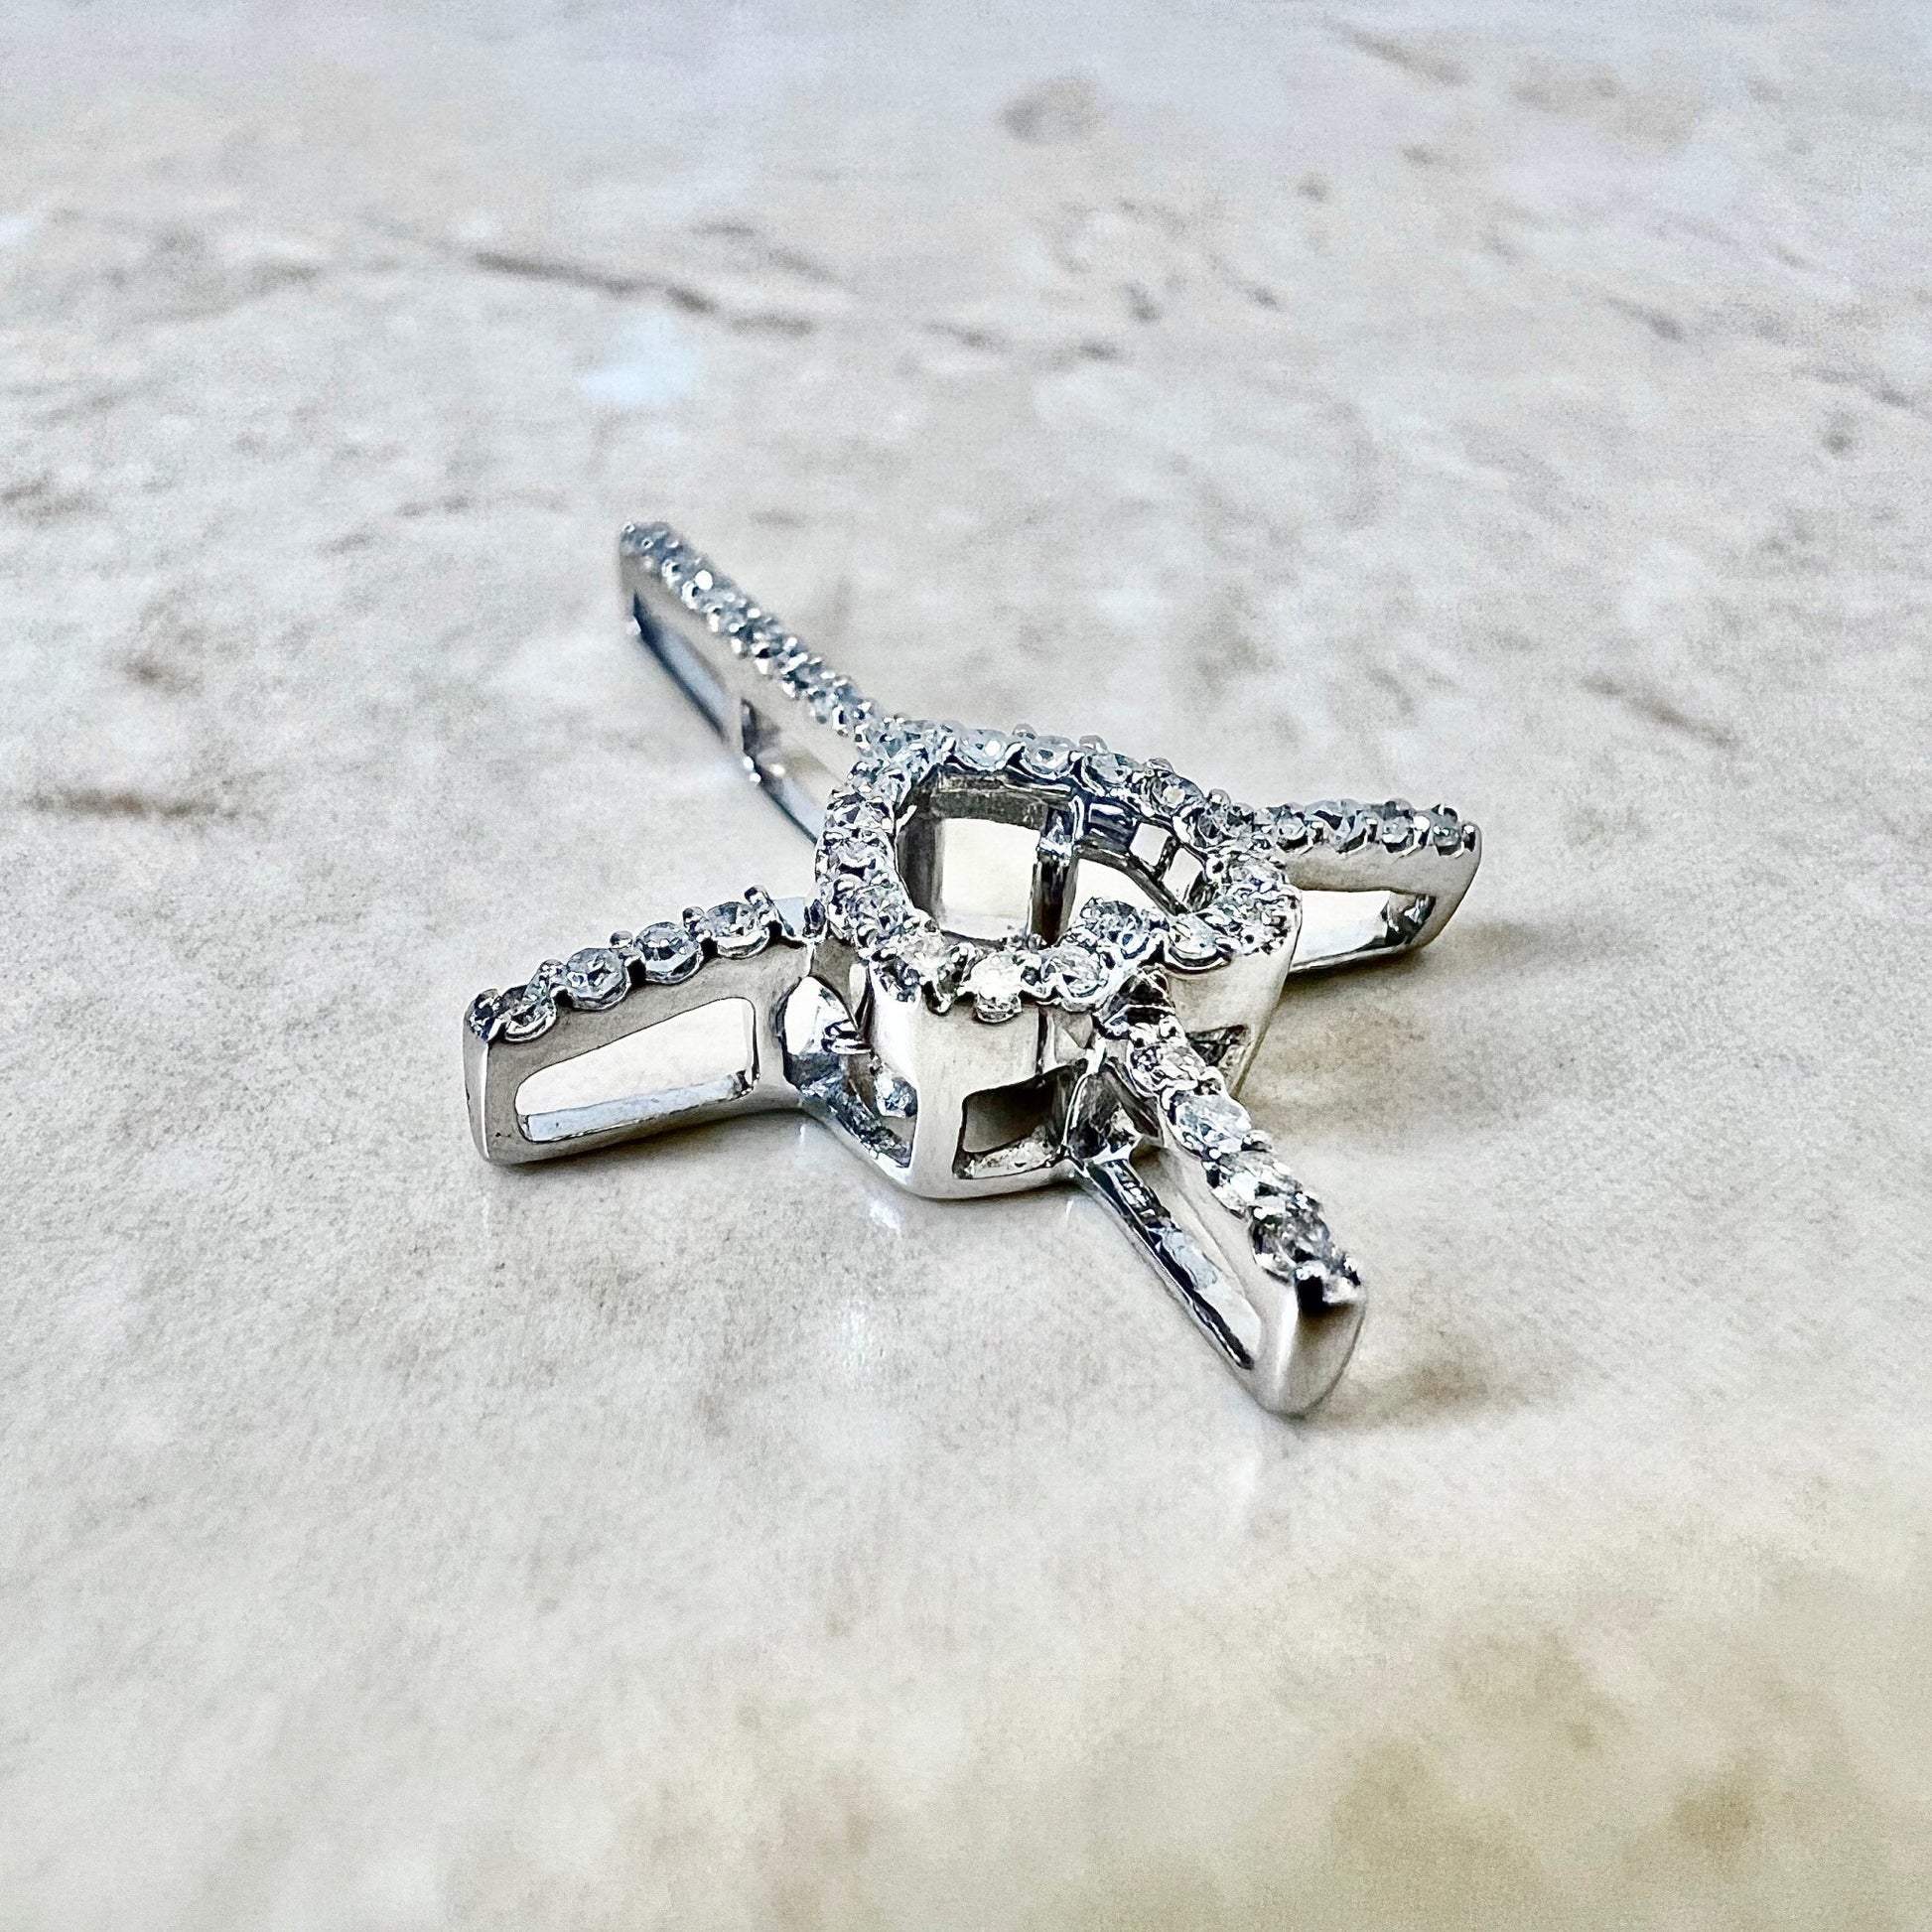 14K Diamond Cross Pendant Necklace - White Gold Diamond Pendant - Religious Jewelry - Christmas Gift For Her - Jewelry Sale